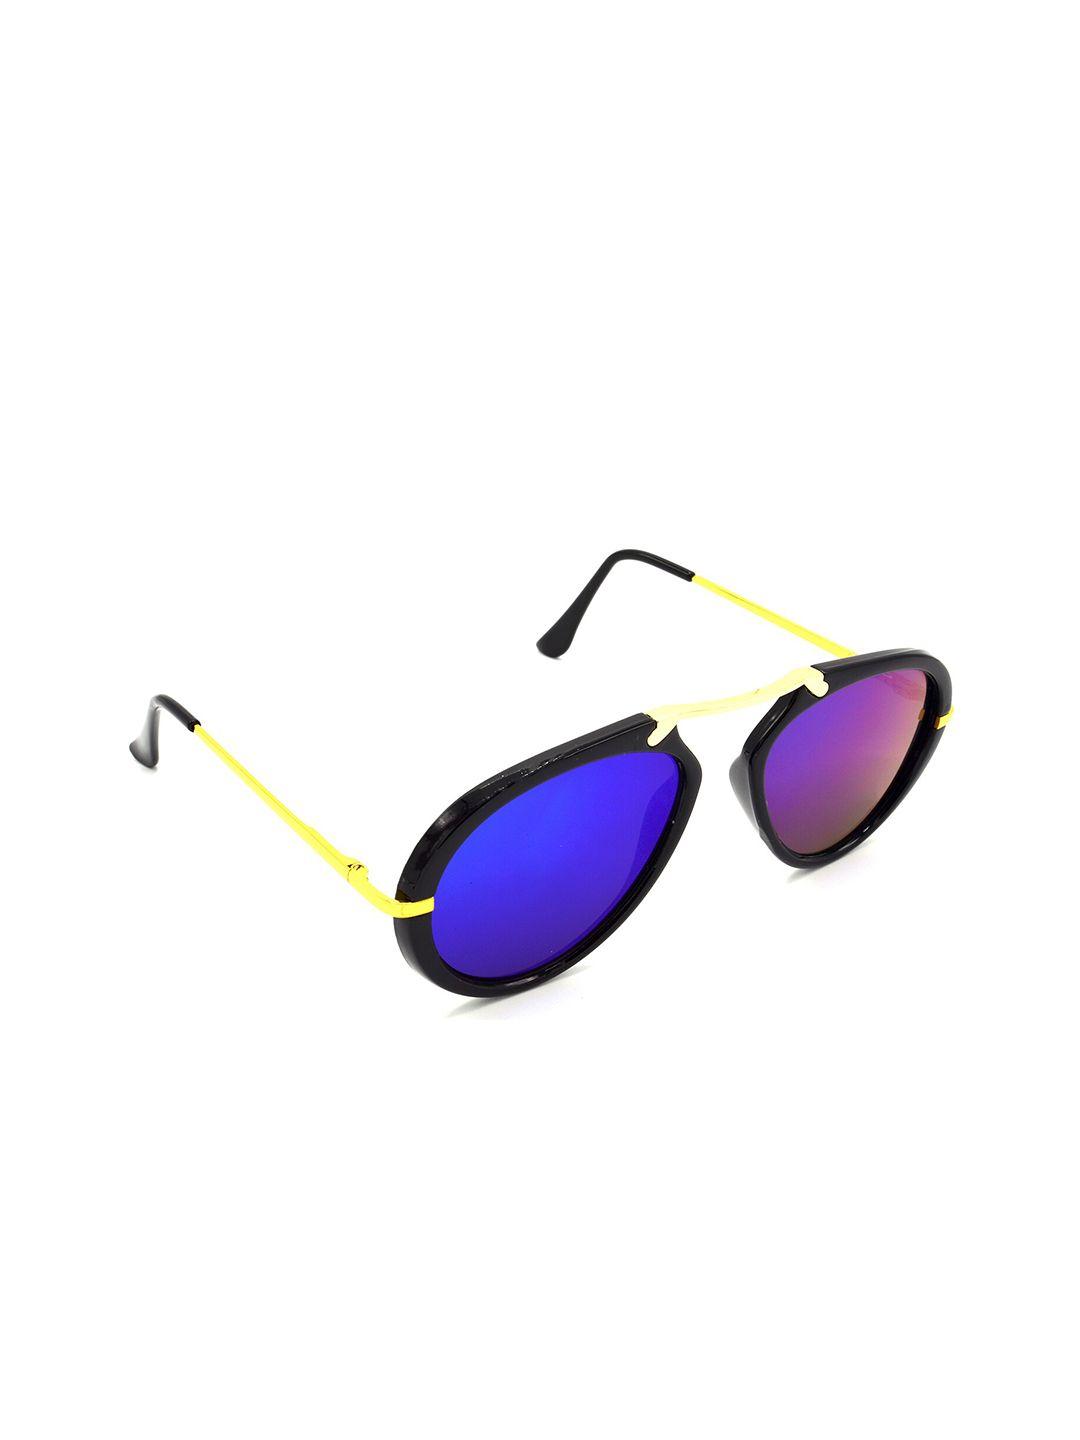 hrinkar unisex blue round sunglasses with uv protected lens